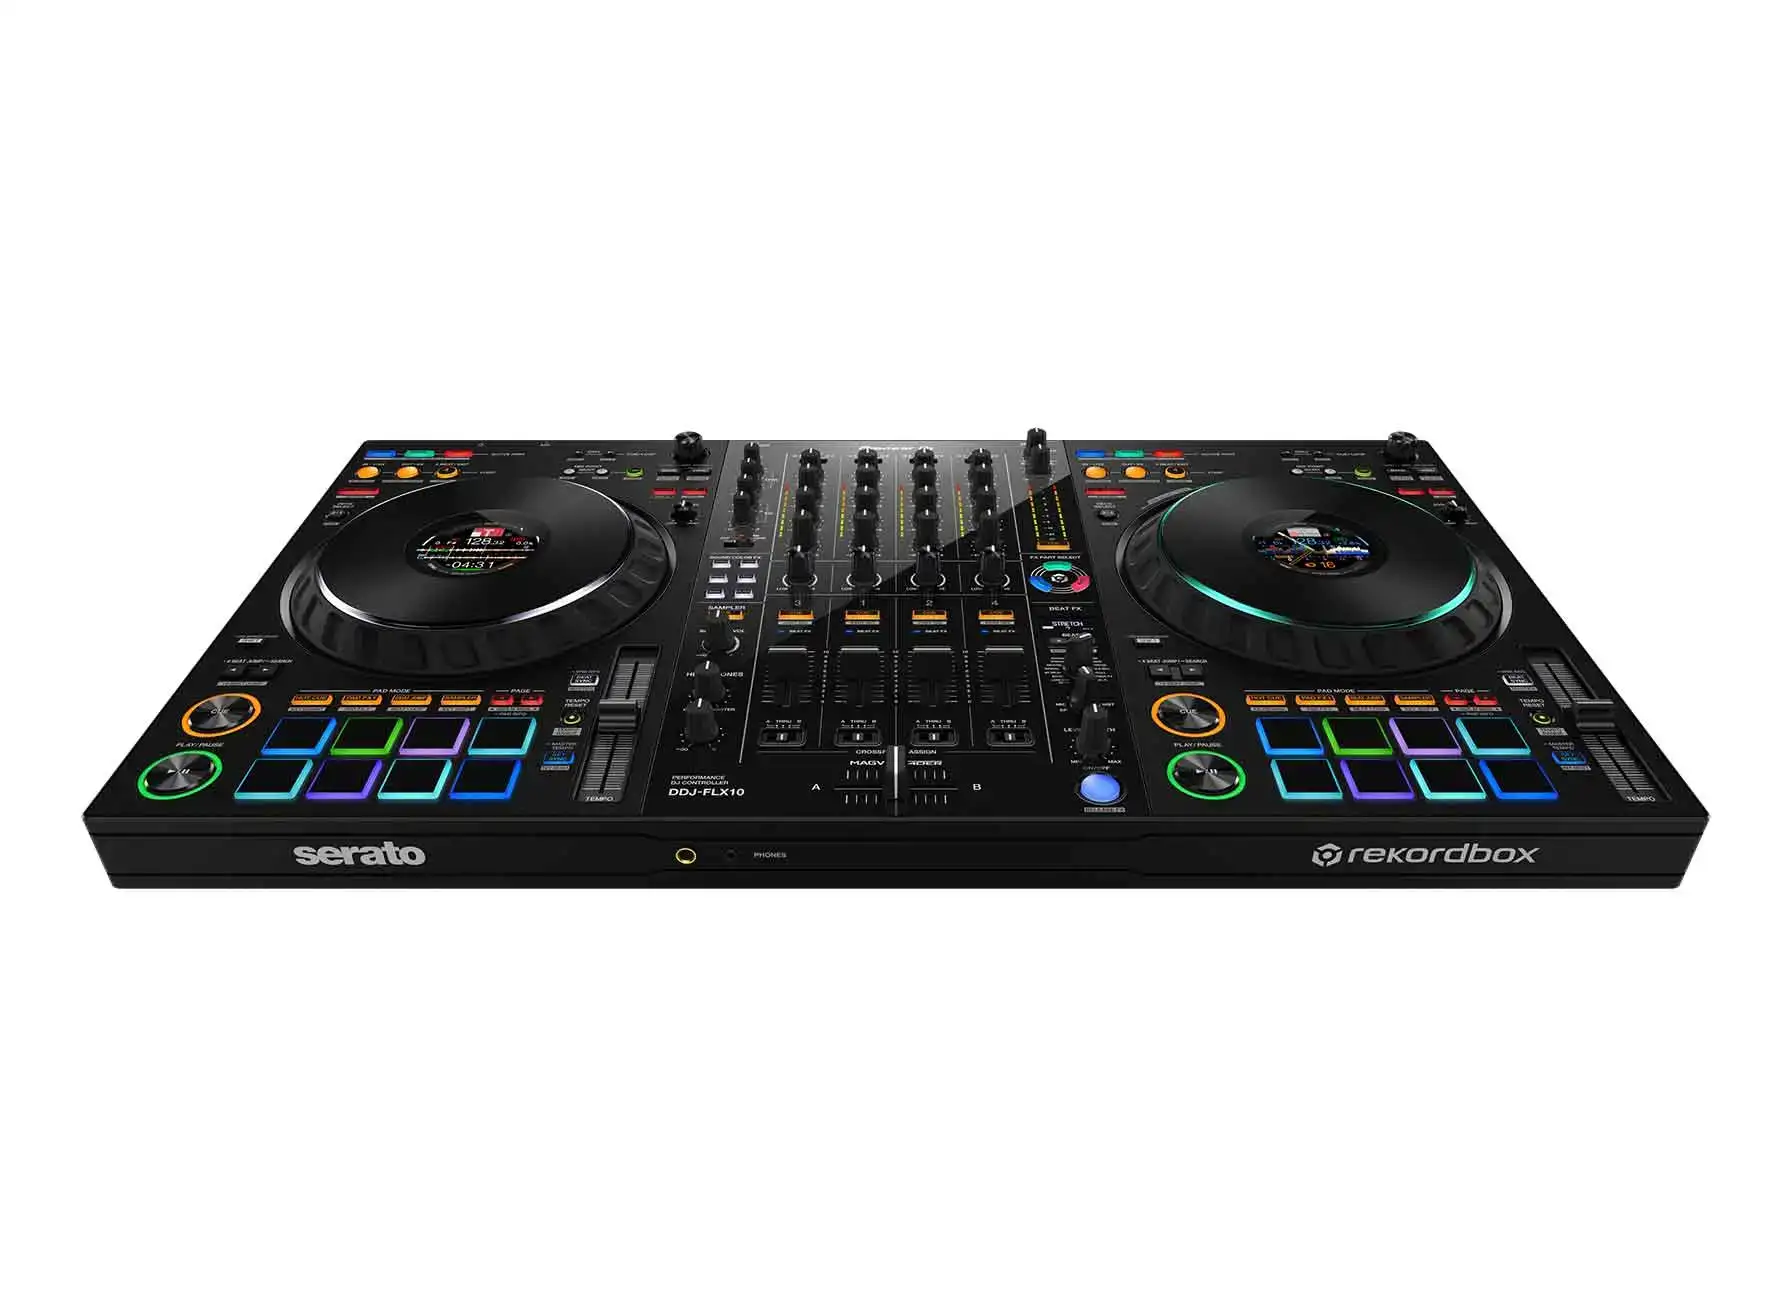 Pioneer DDJ-FLX10 4 Kanal DJ Controller - Thumbnail